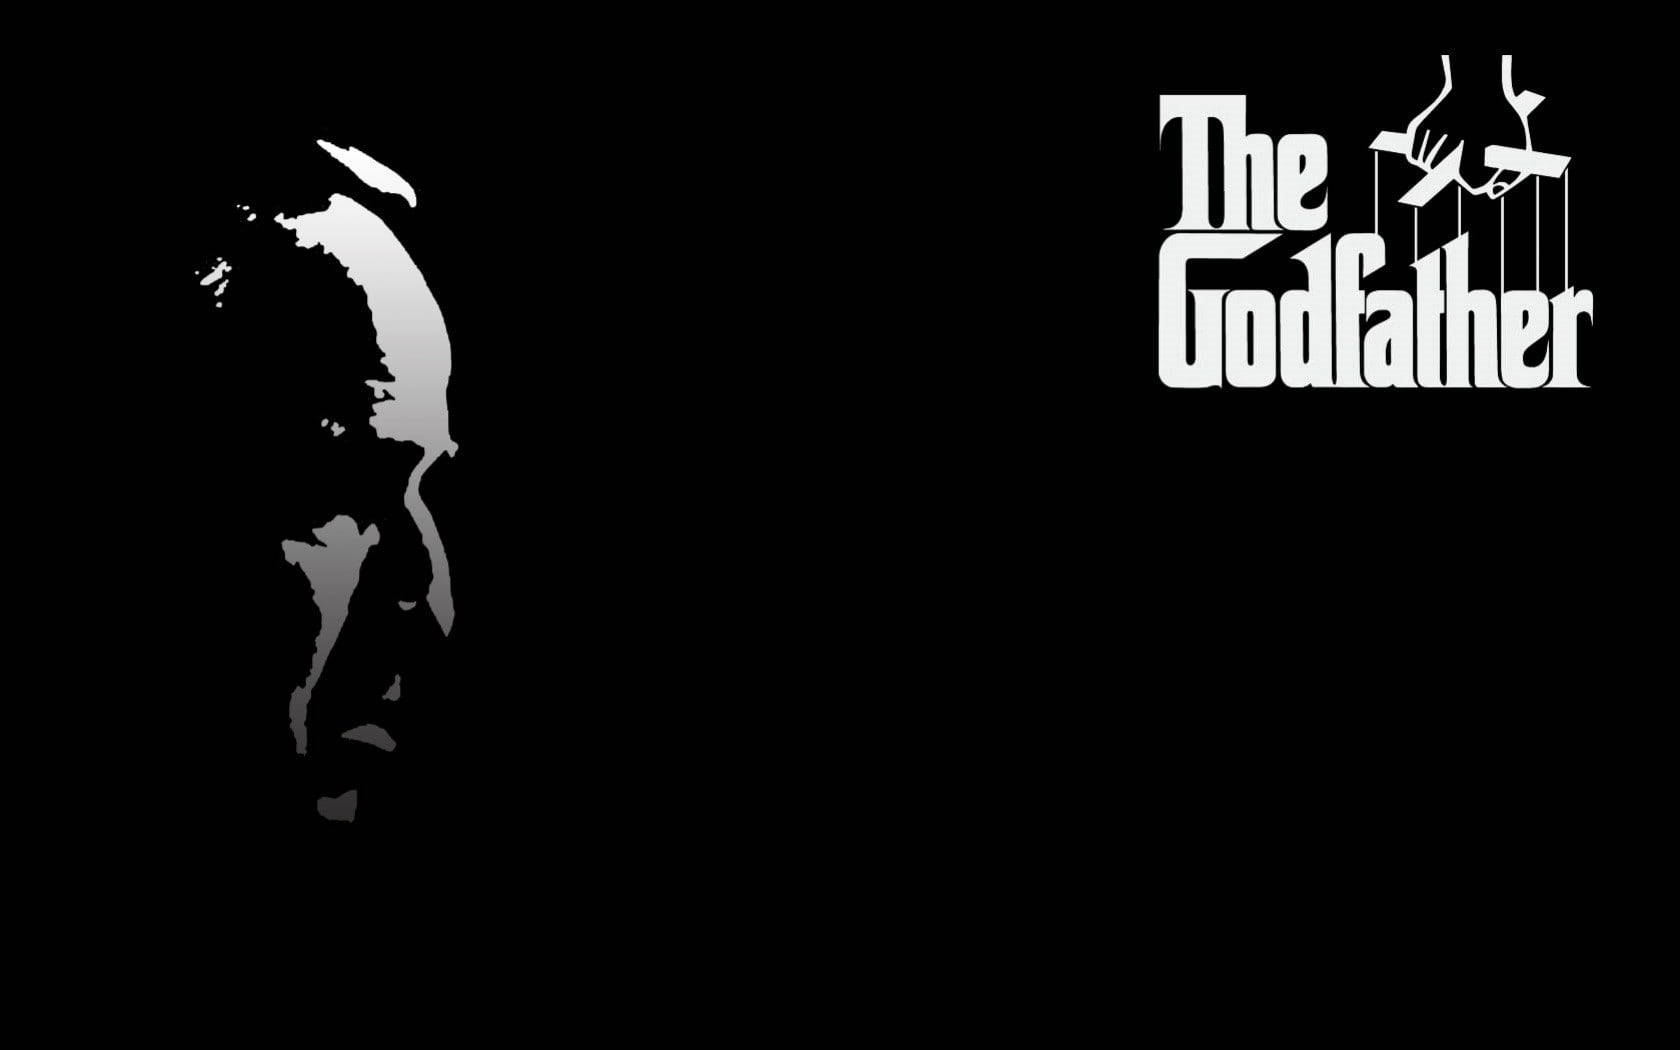 Mafia Film The Godfather Poster